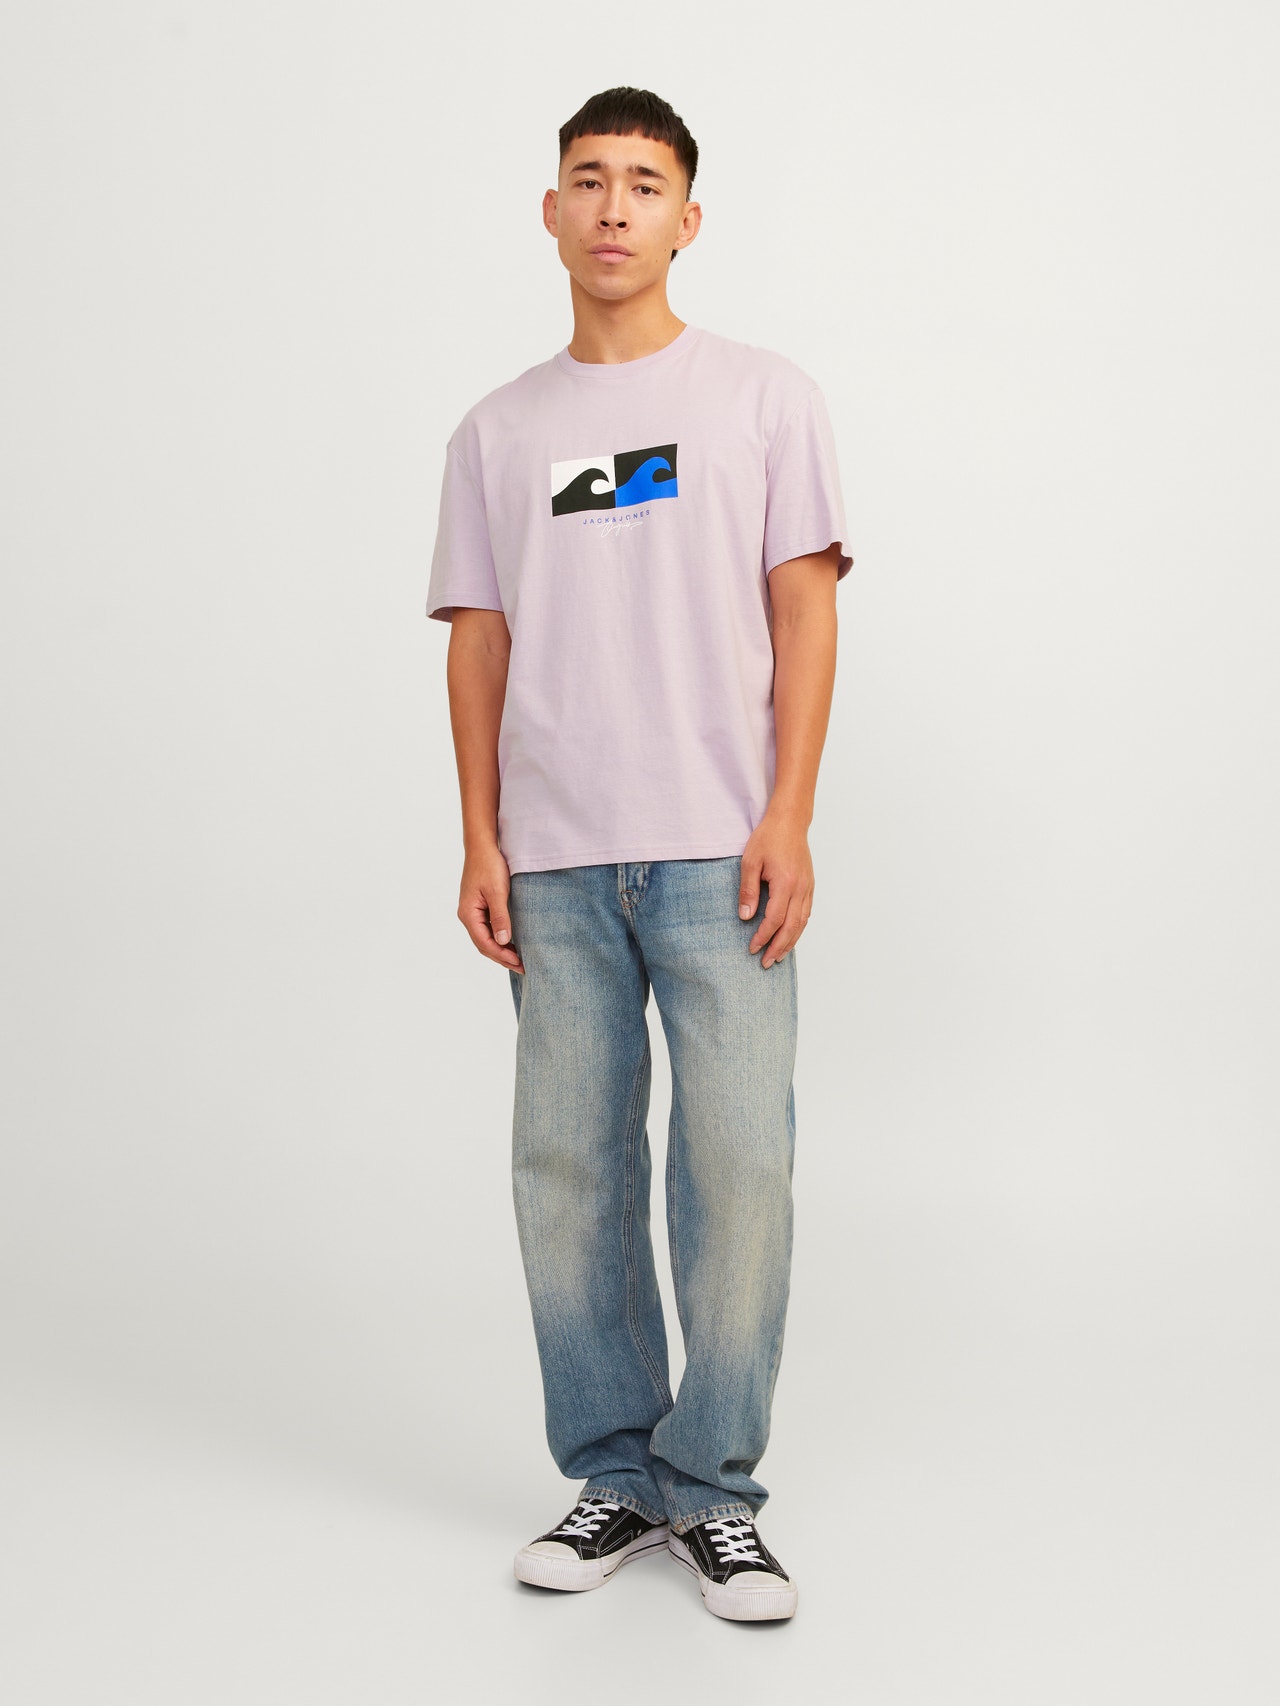 Jack & Jones T-shirt Estampar Decote Redondo -Lavender Frost - 12255569